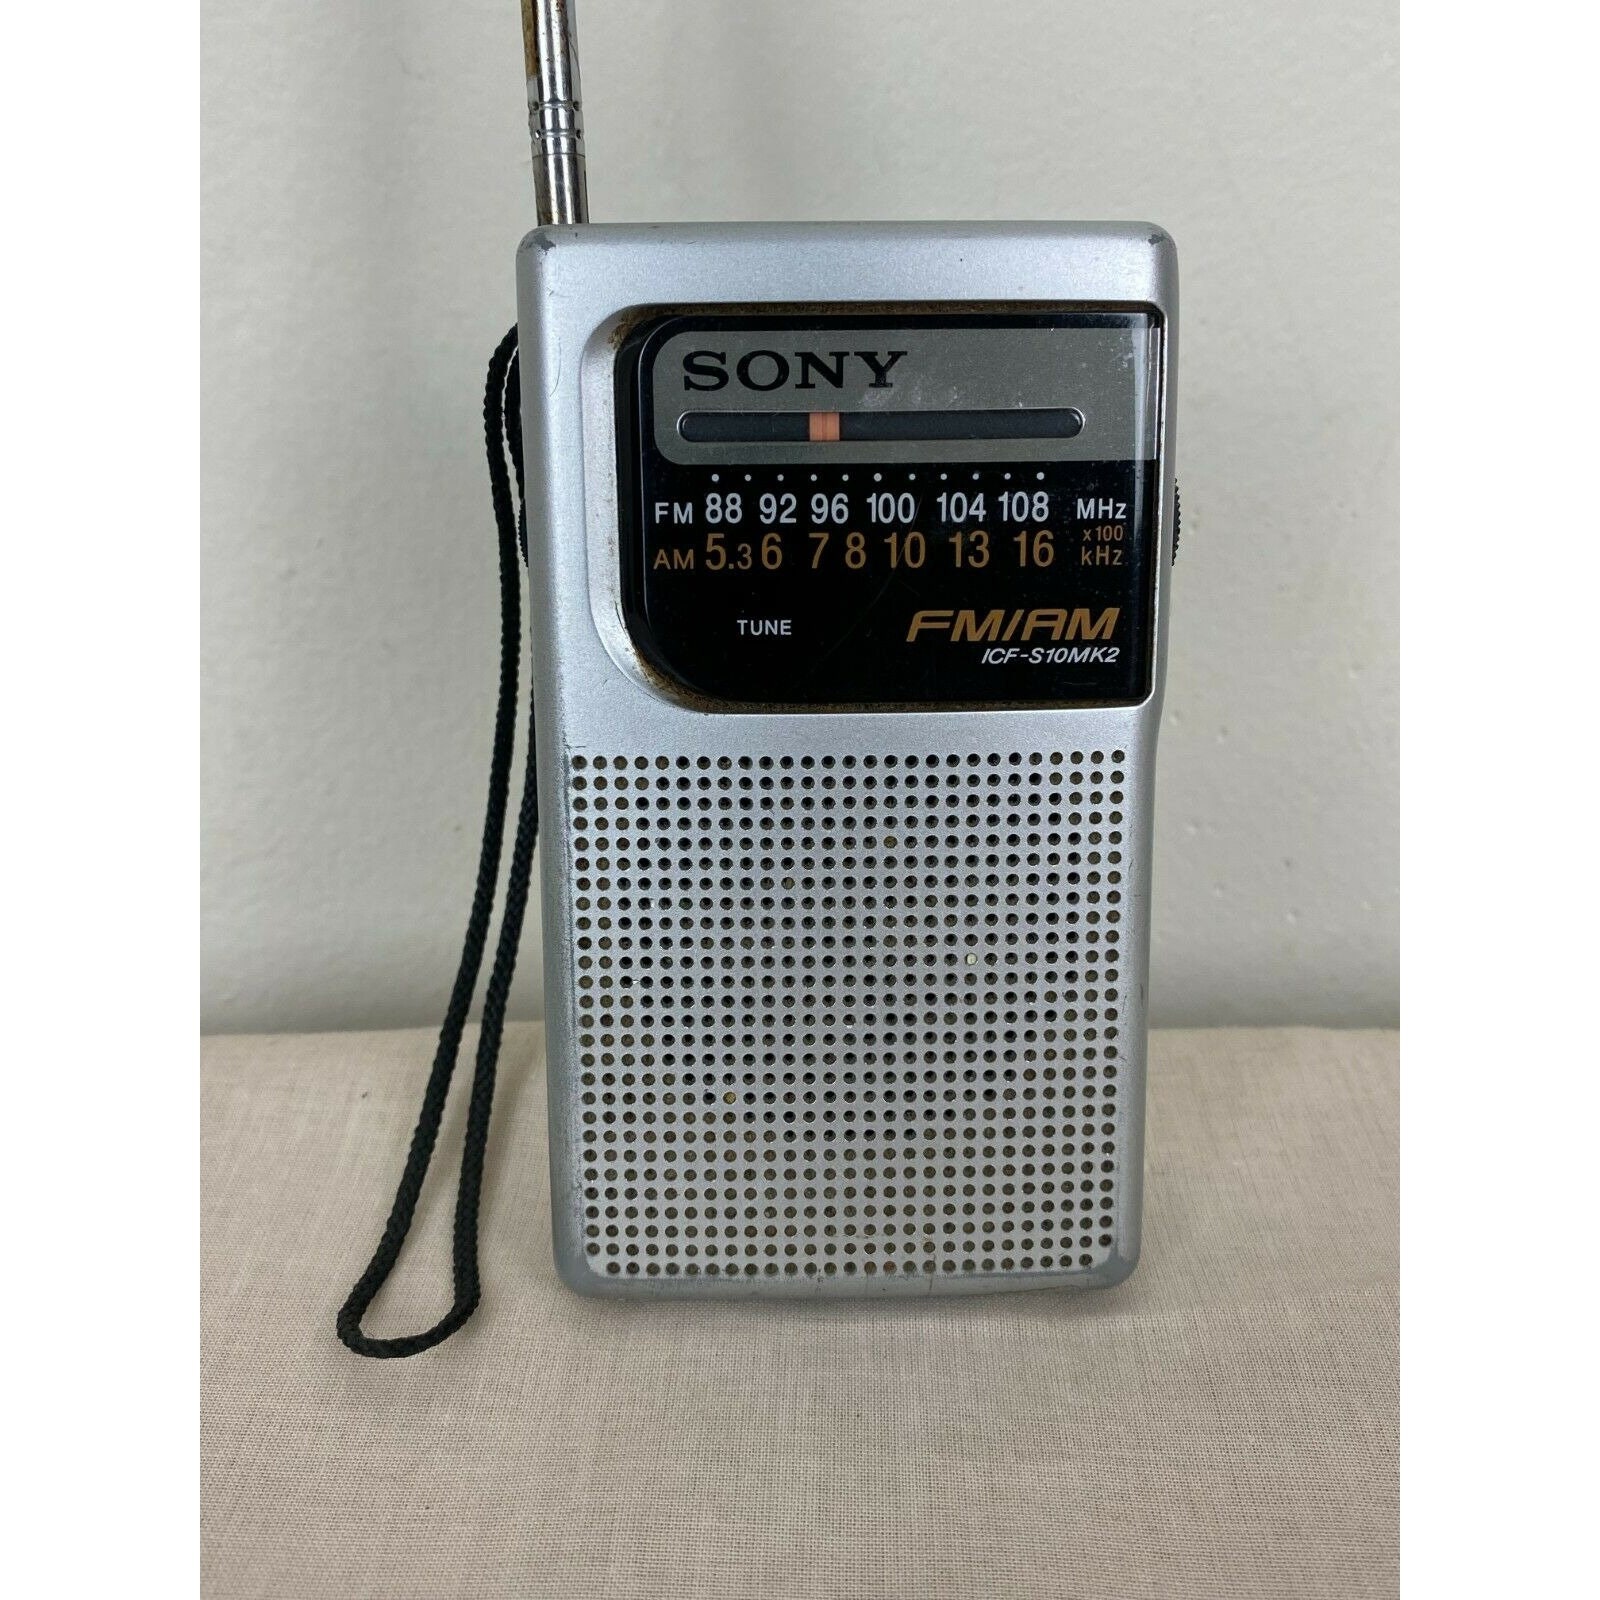 Sony ICF-S10MK2 Radio AM/FM de bolsillo, Plata